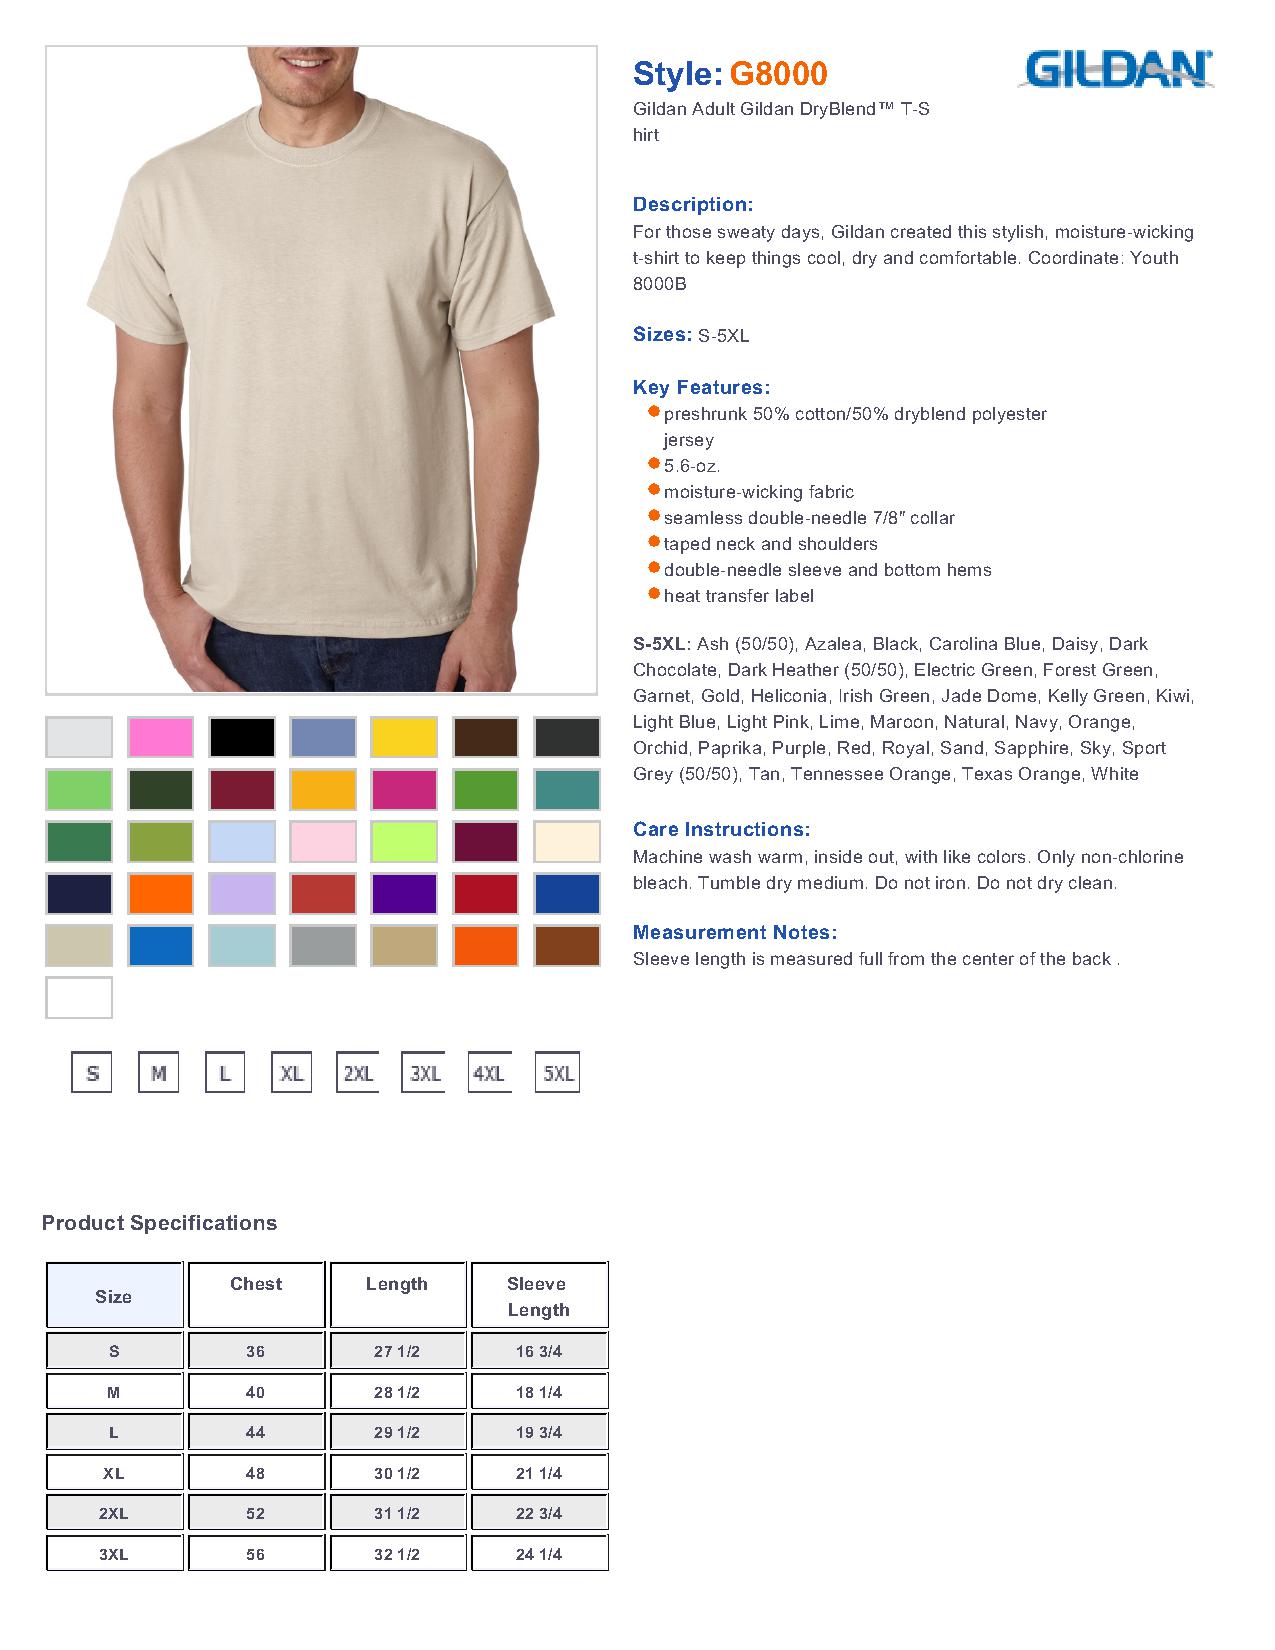 Gildan G8000 - Adult Gildan DryBlend T-shirt $2.15 - Men's T-Shirts